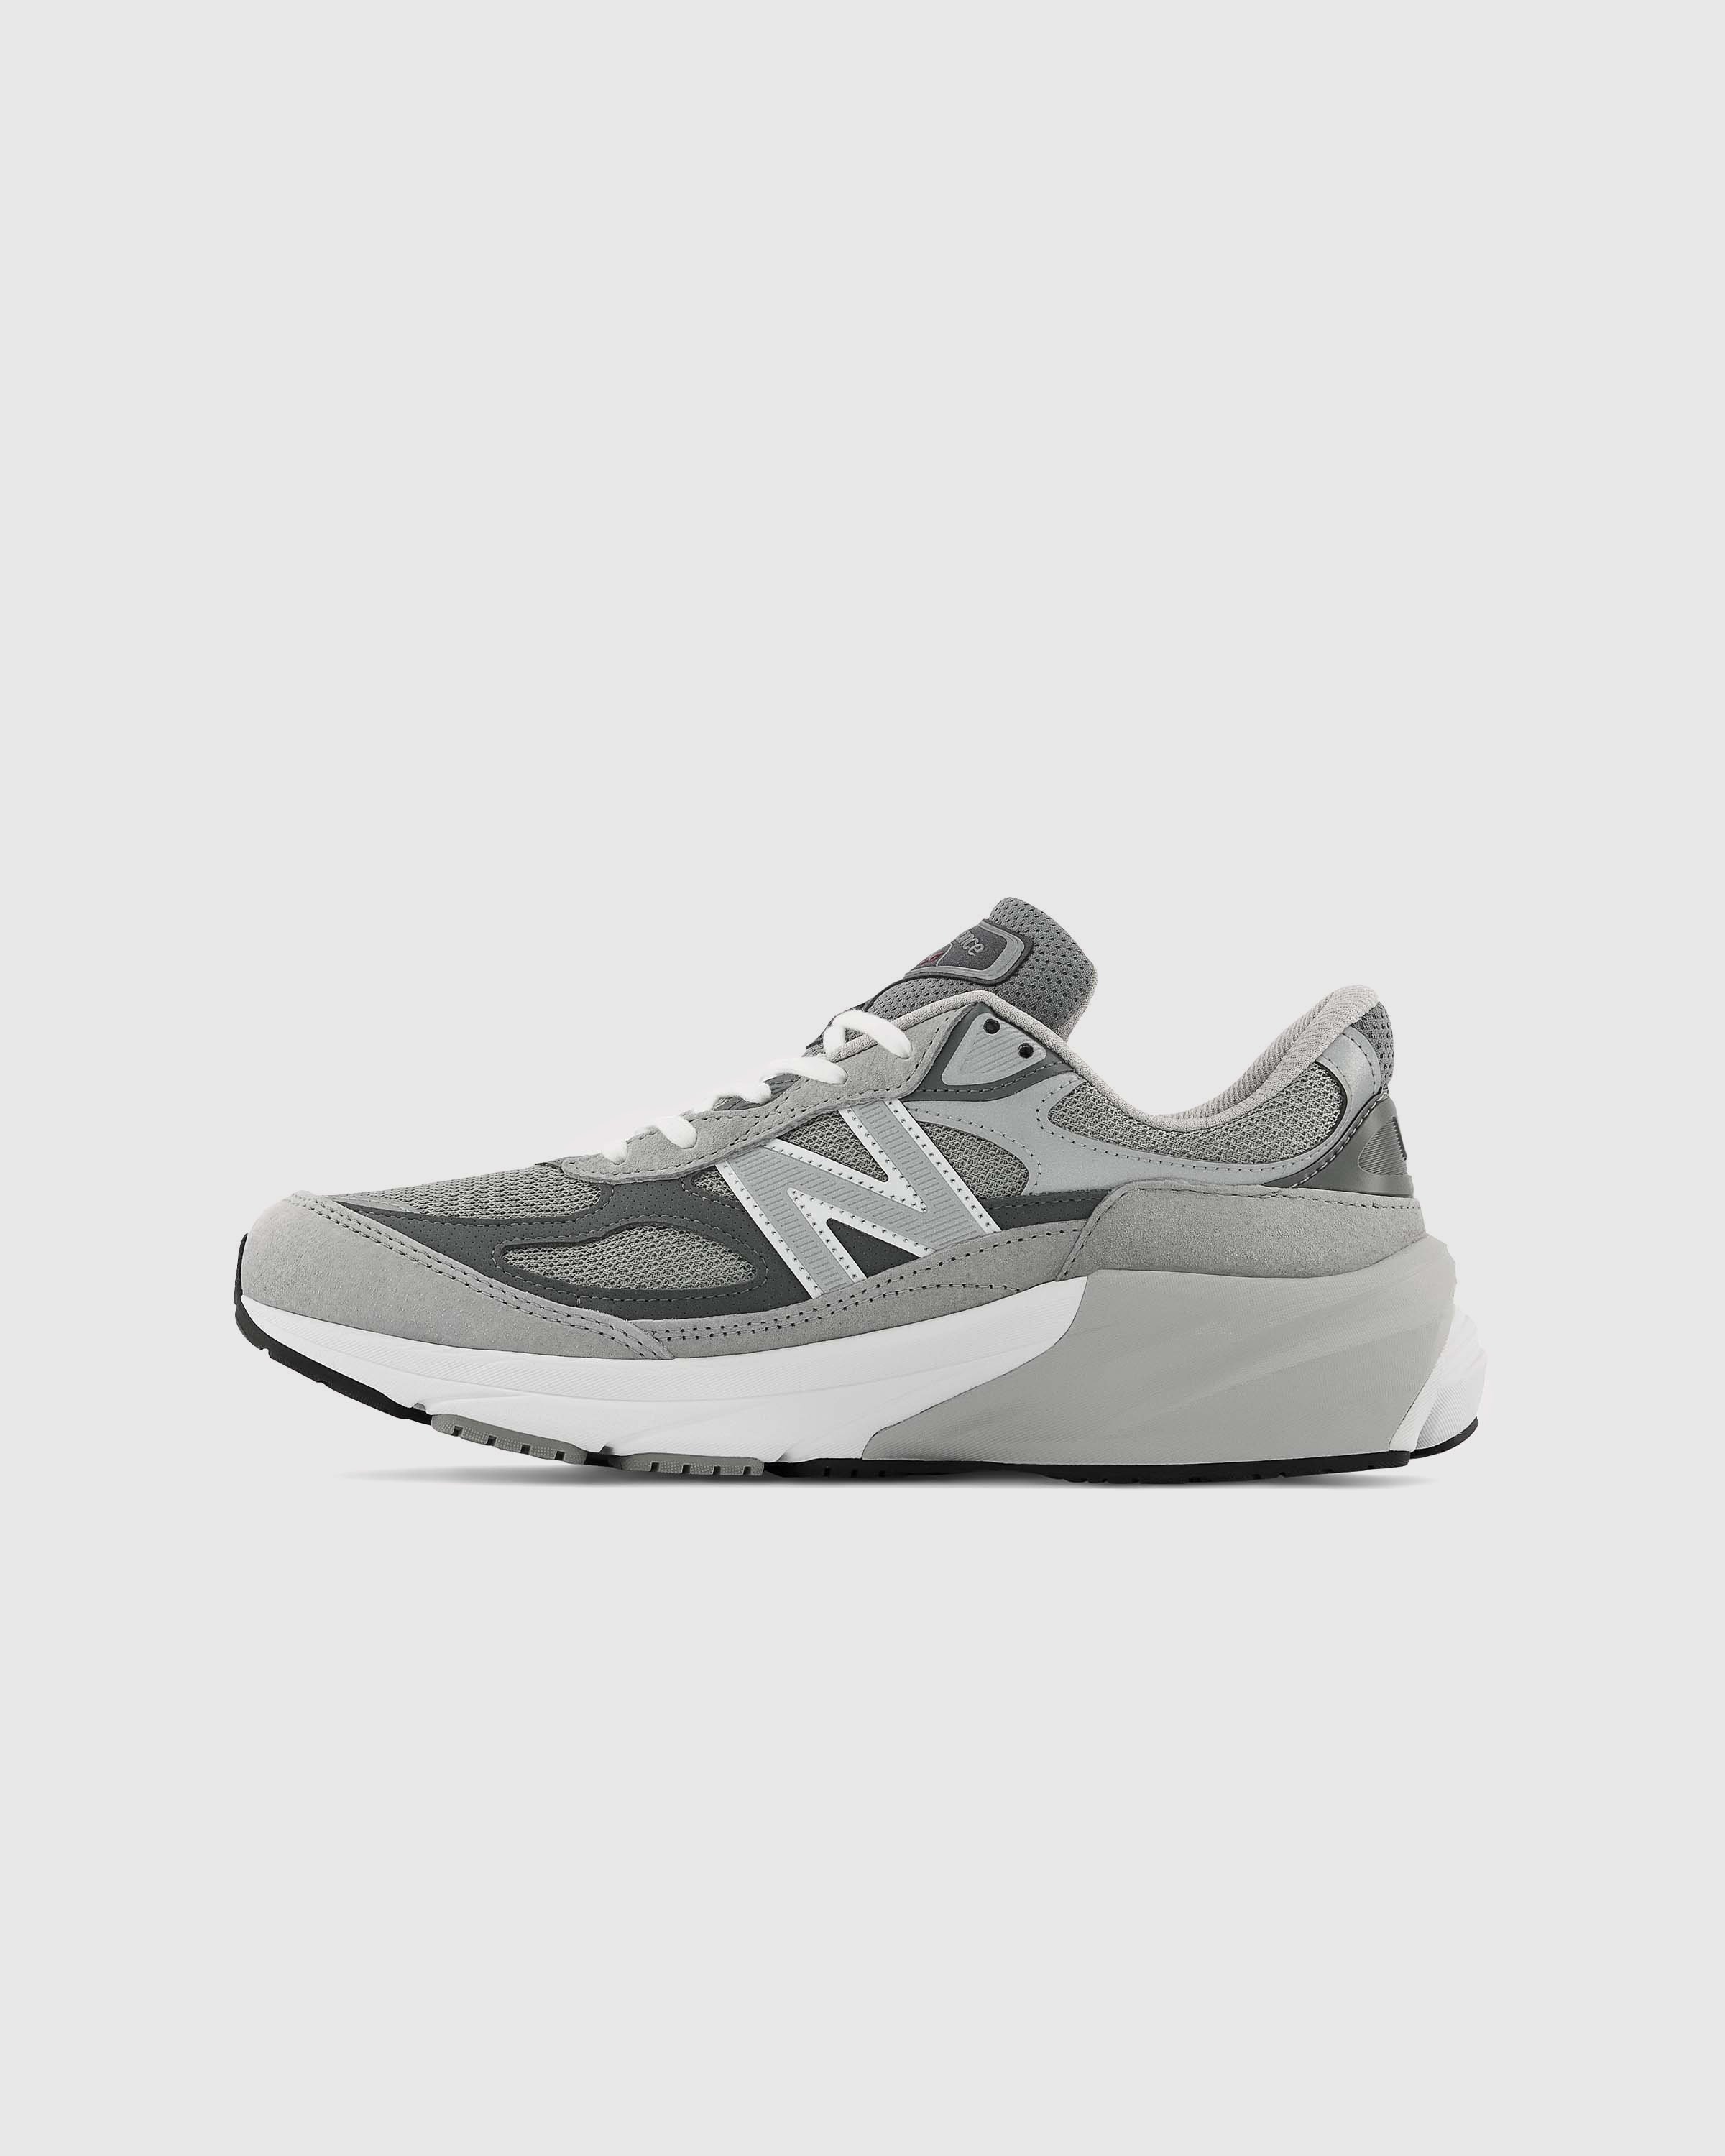 New Balance - M 990v6 Cool Gray - Footwear - Grey - Image 2